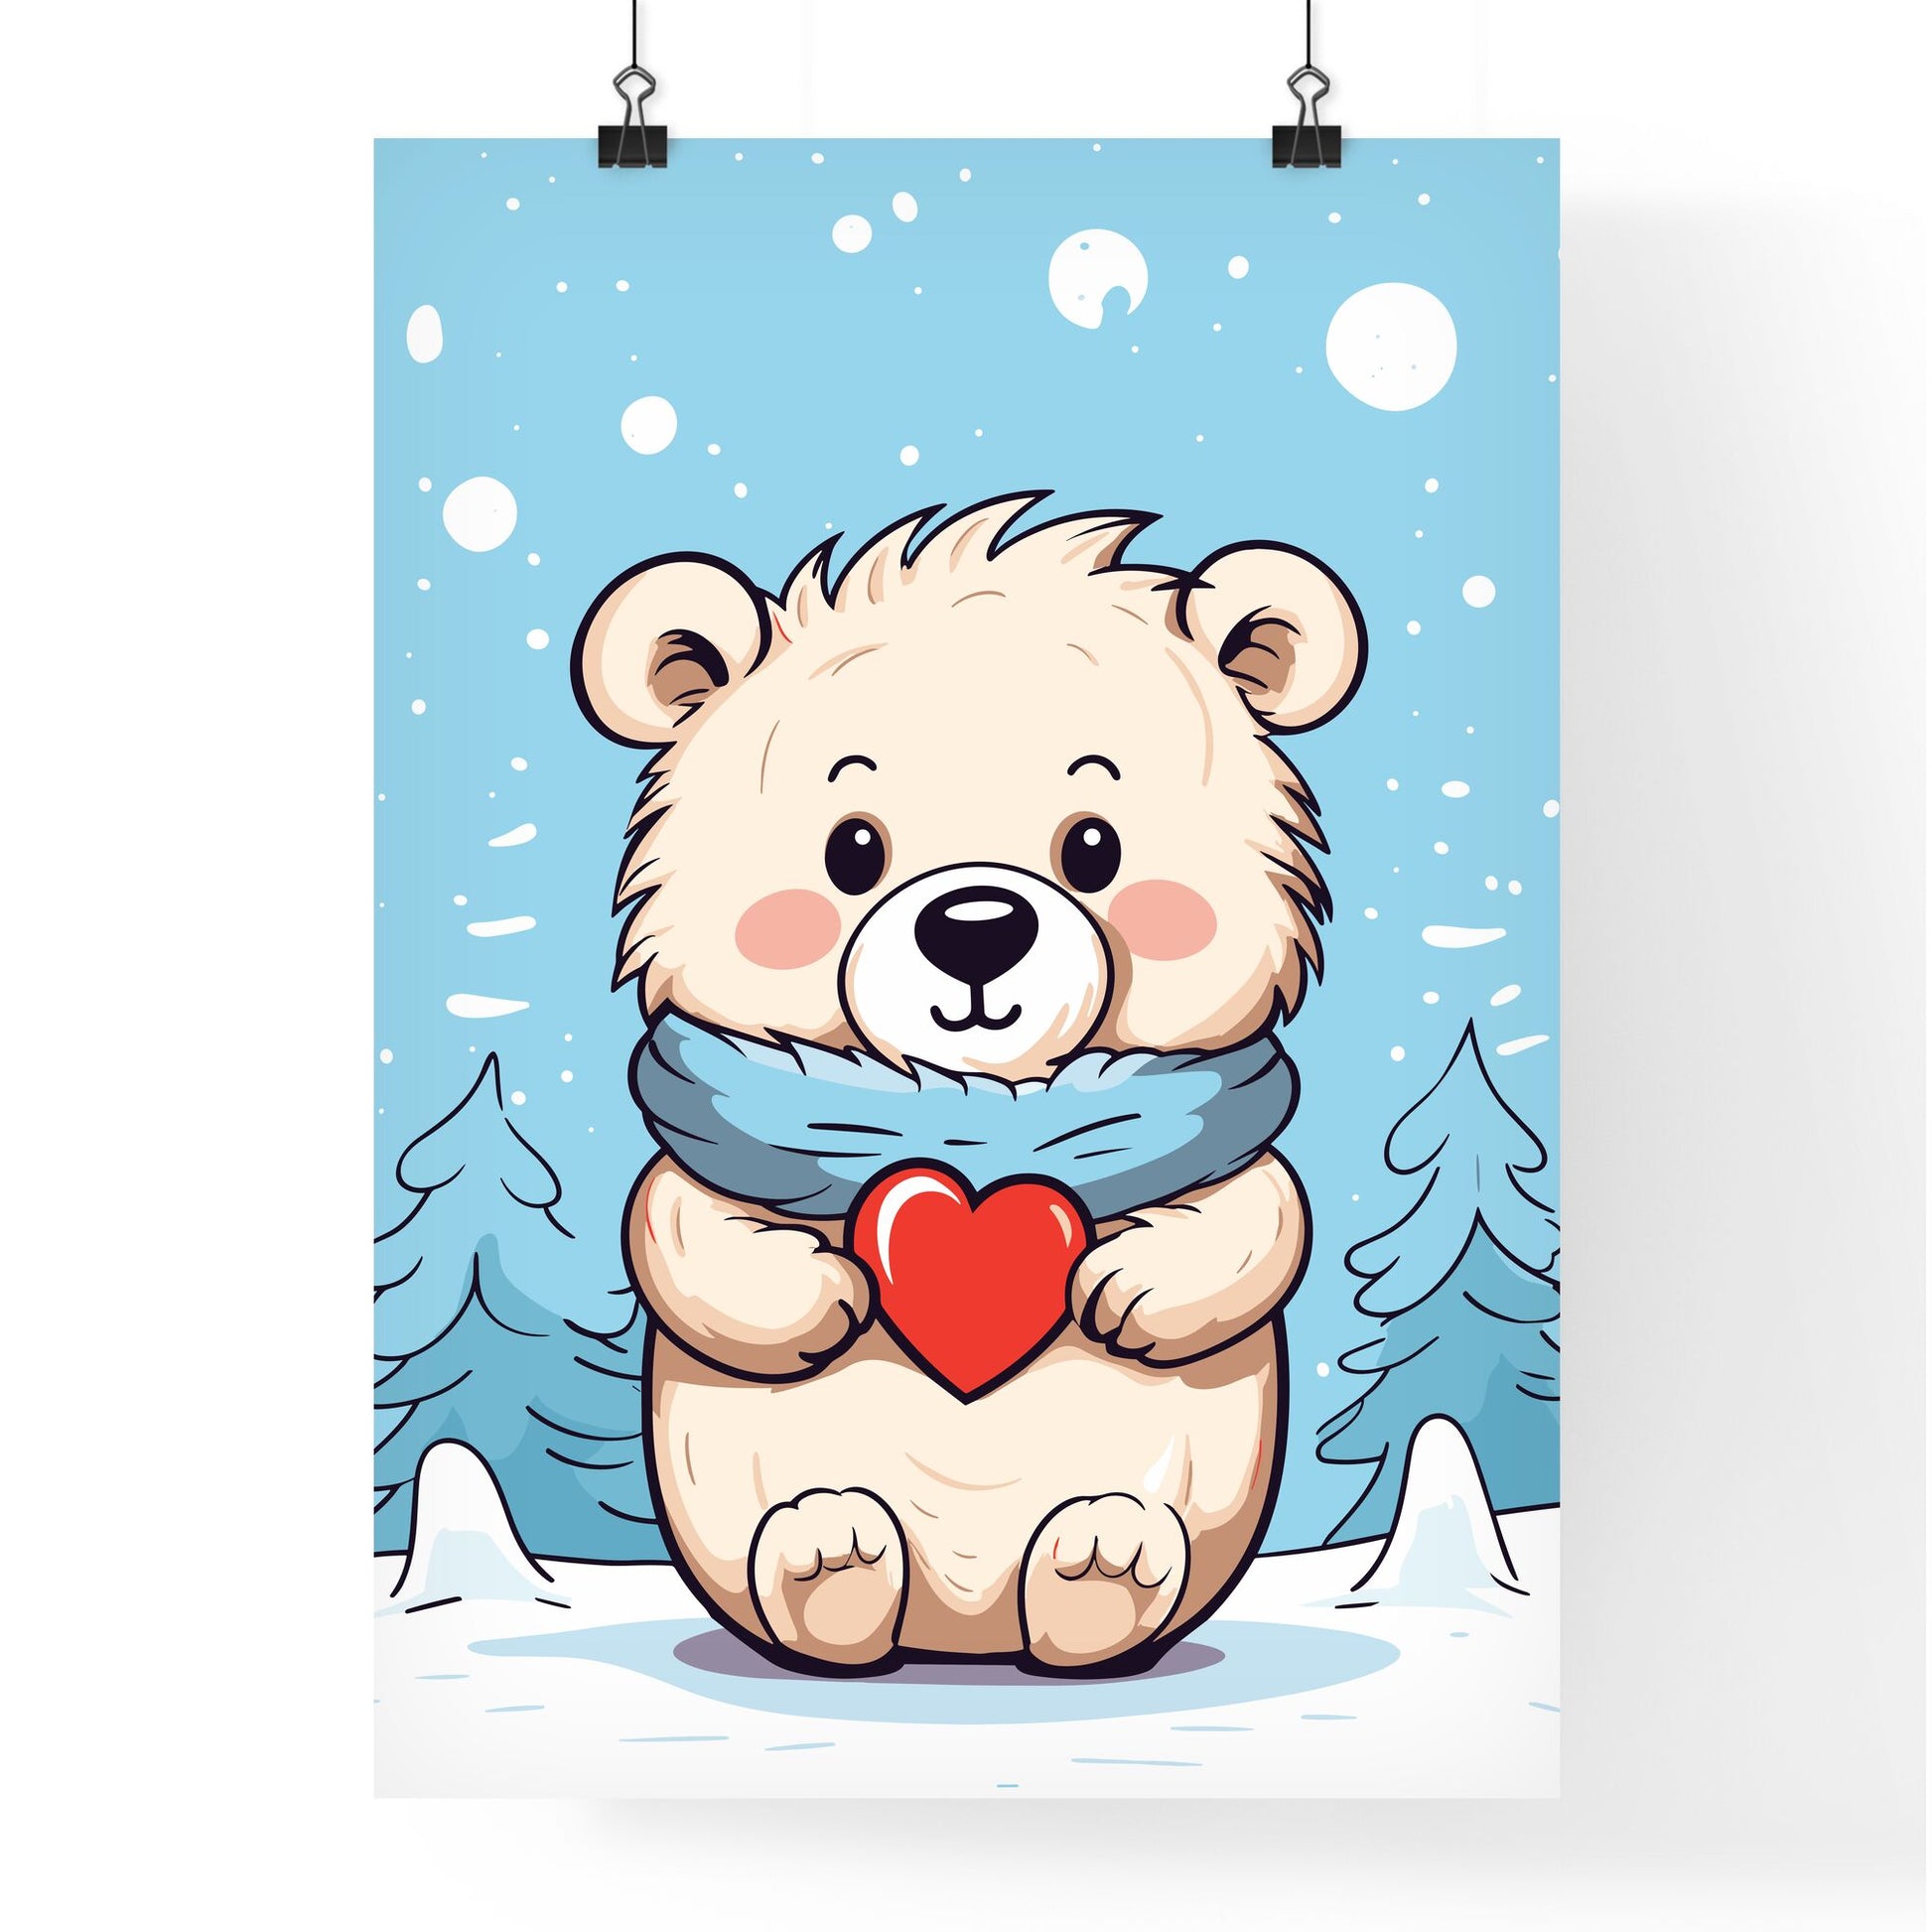 Merry Christmas Card With A Cute Bear Huging A Heart - A Cartoon Of A Bear Holding A Heart Default Title